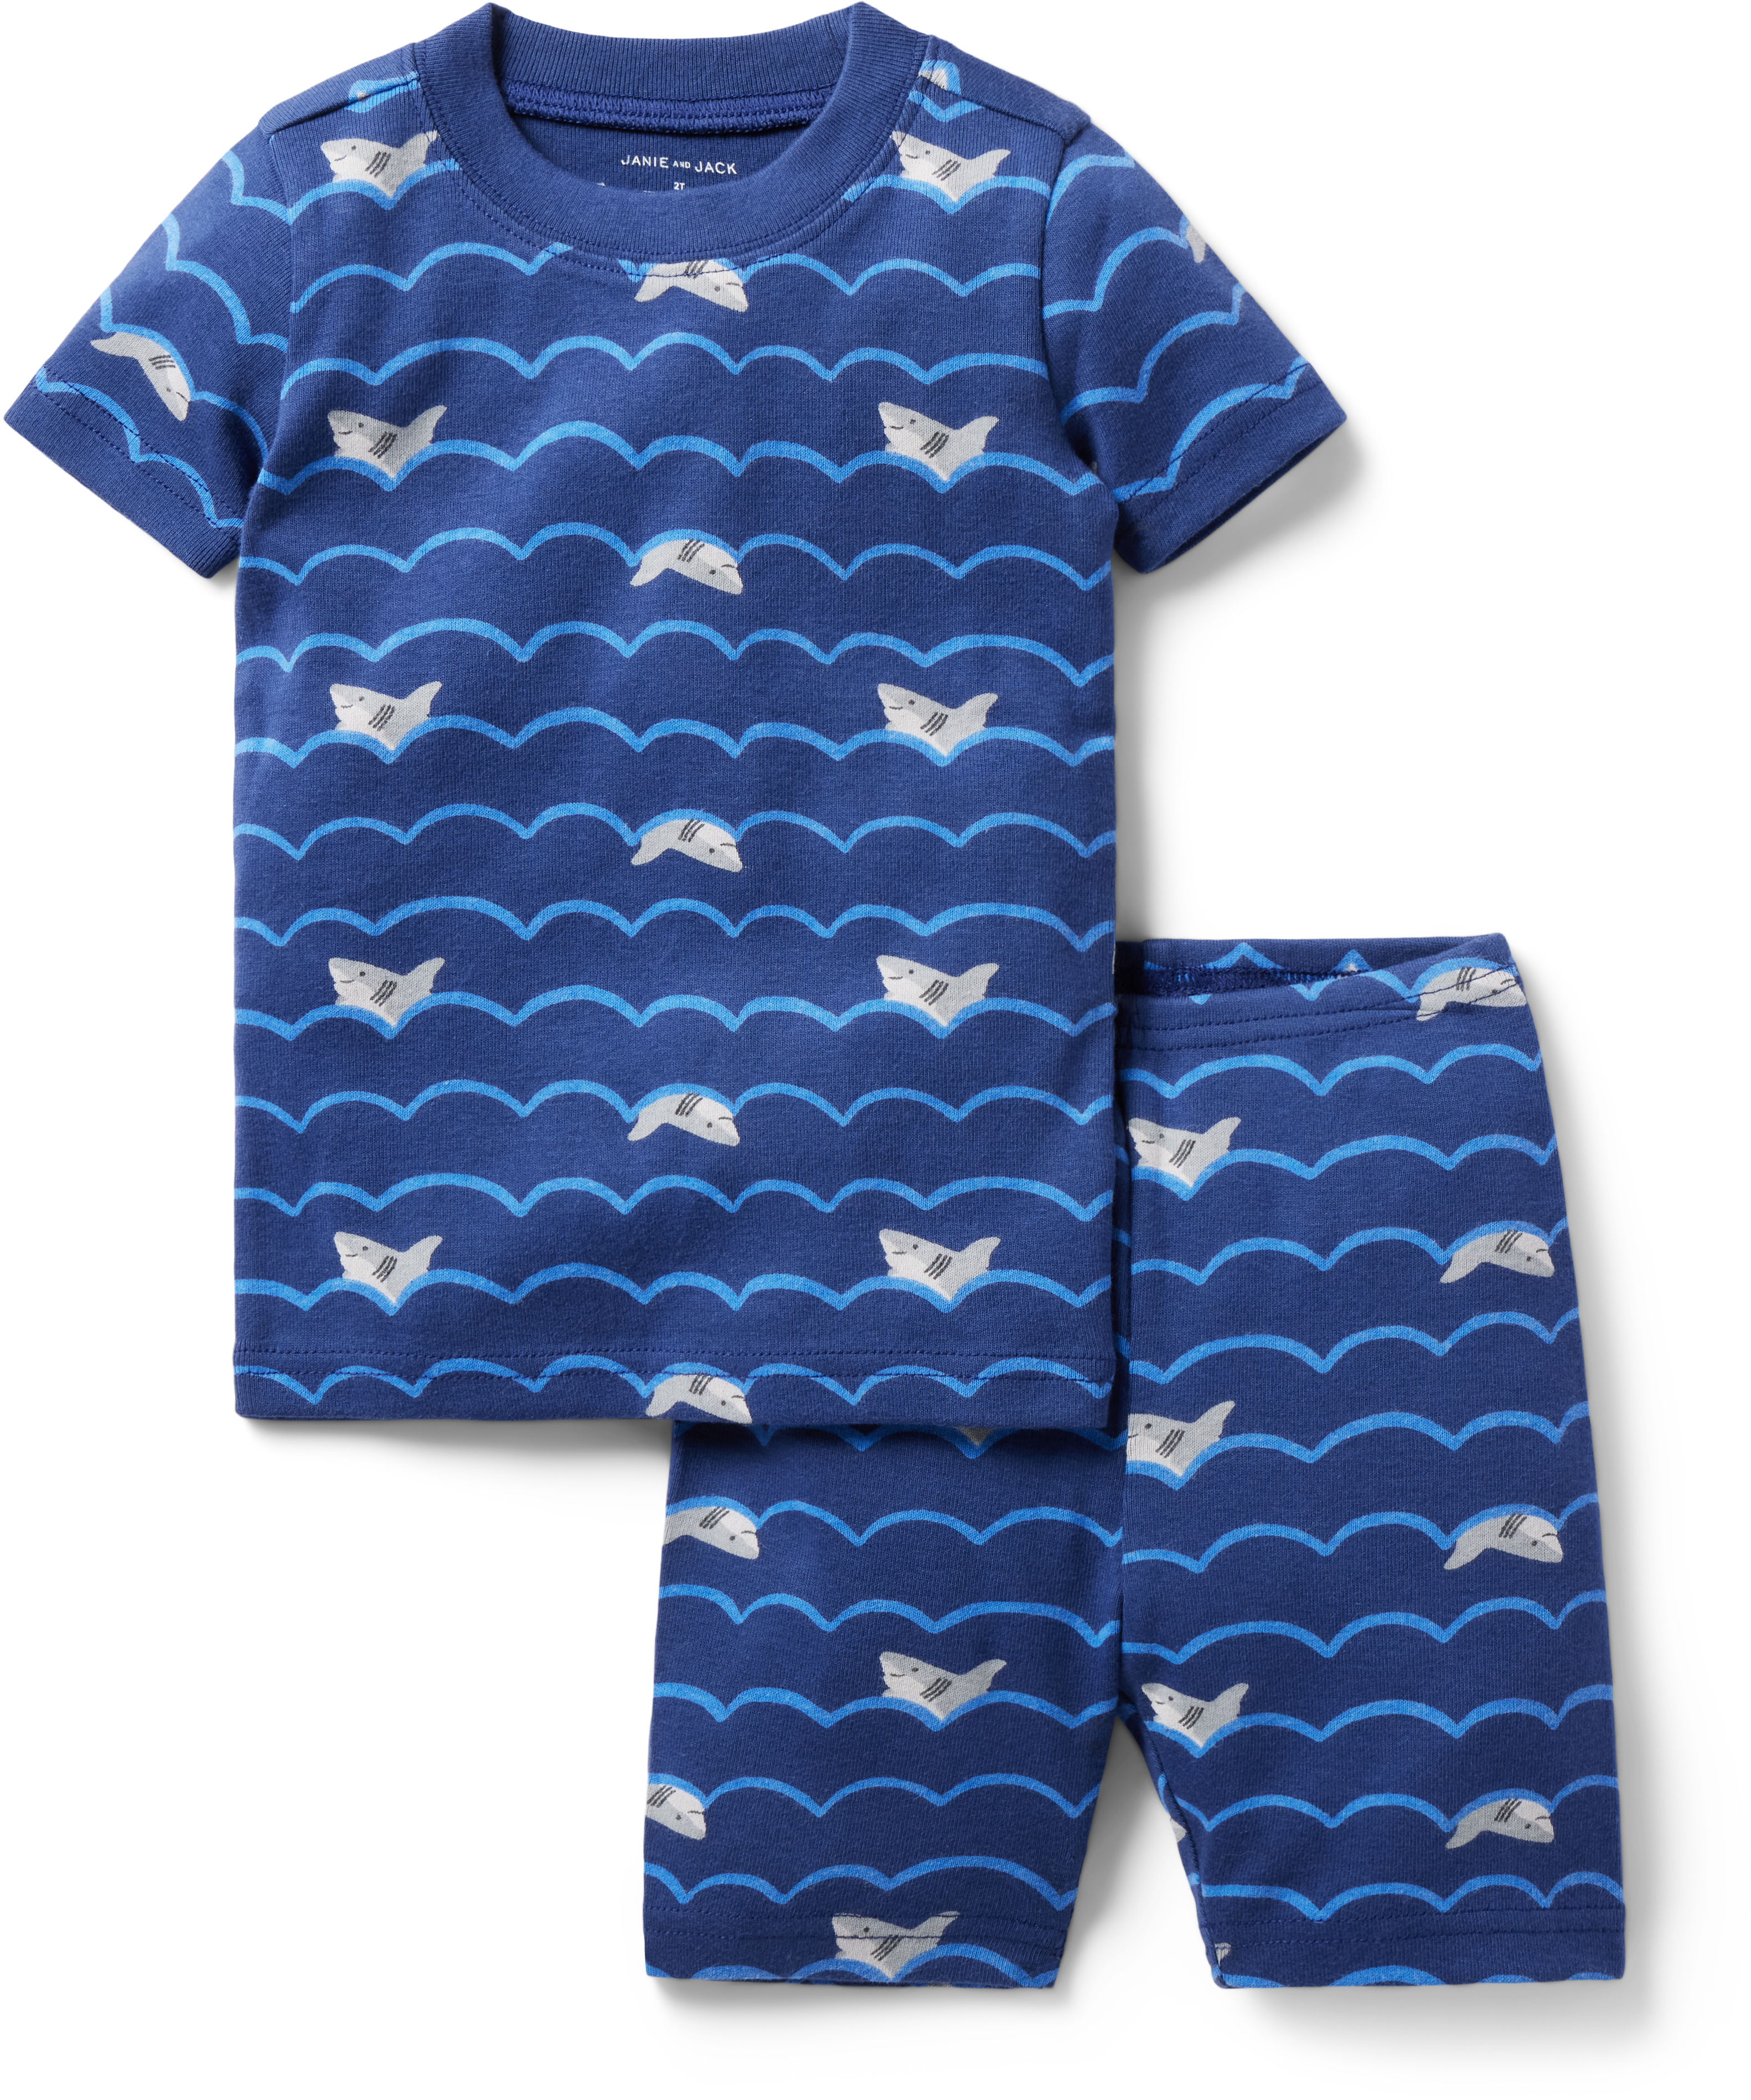 Shark Short Tight Fit Sleepwear (Toddler/Little Kids/Big Kids) Janie and Jack